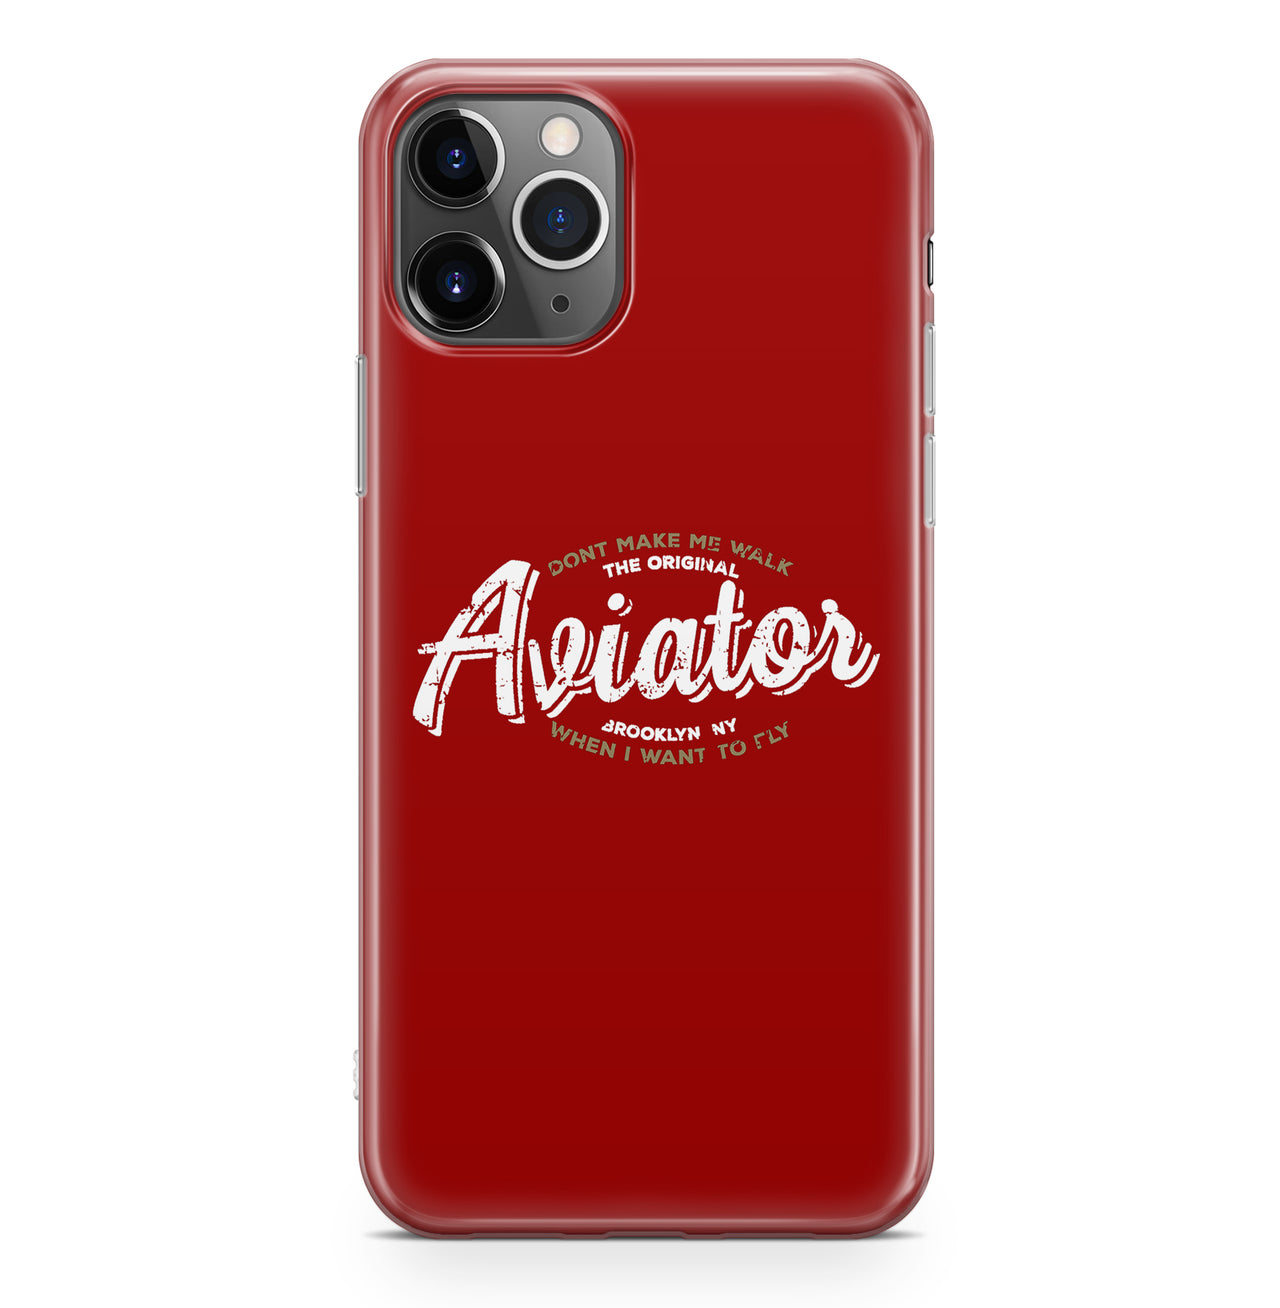 Aviator - Dont Make Me Walk Designed iPhone Cases